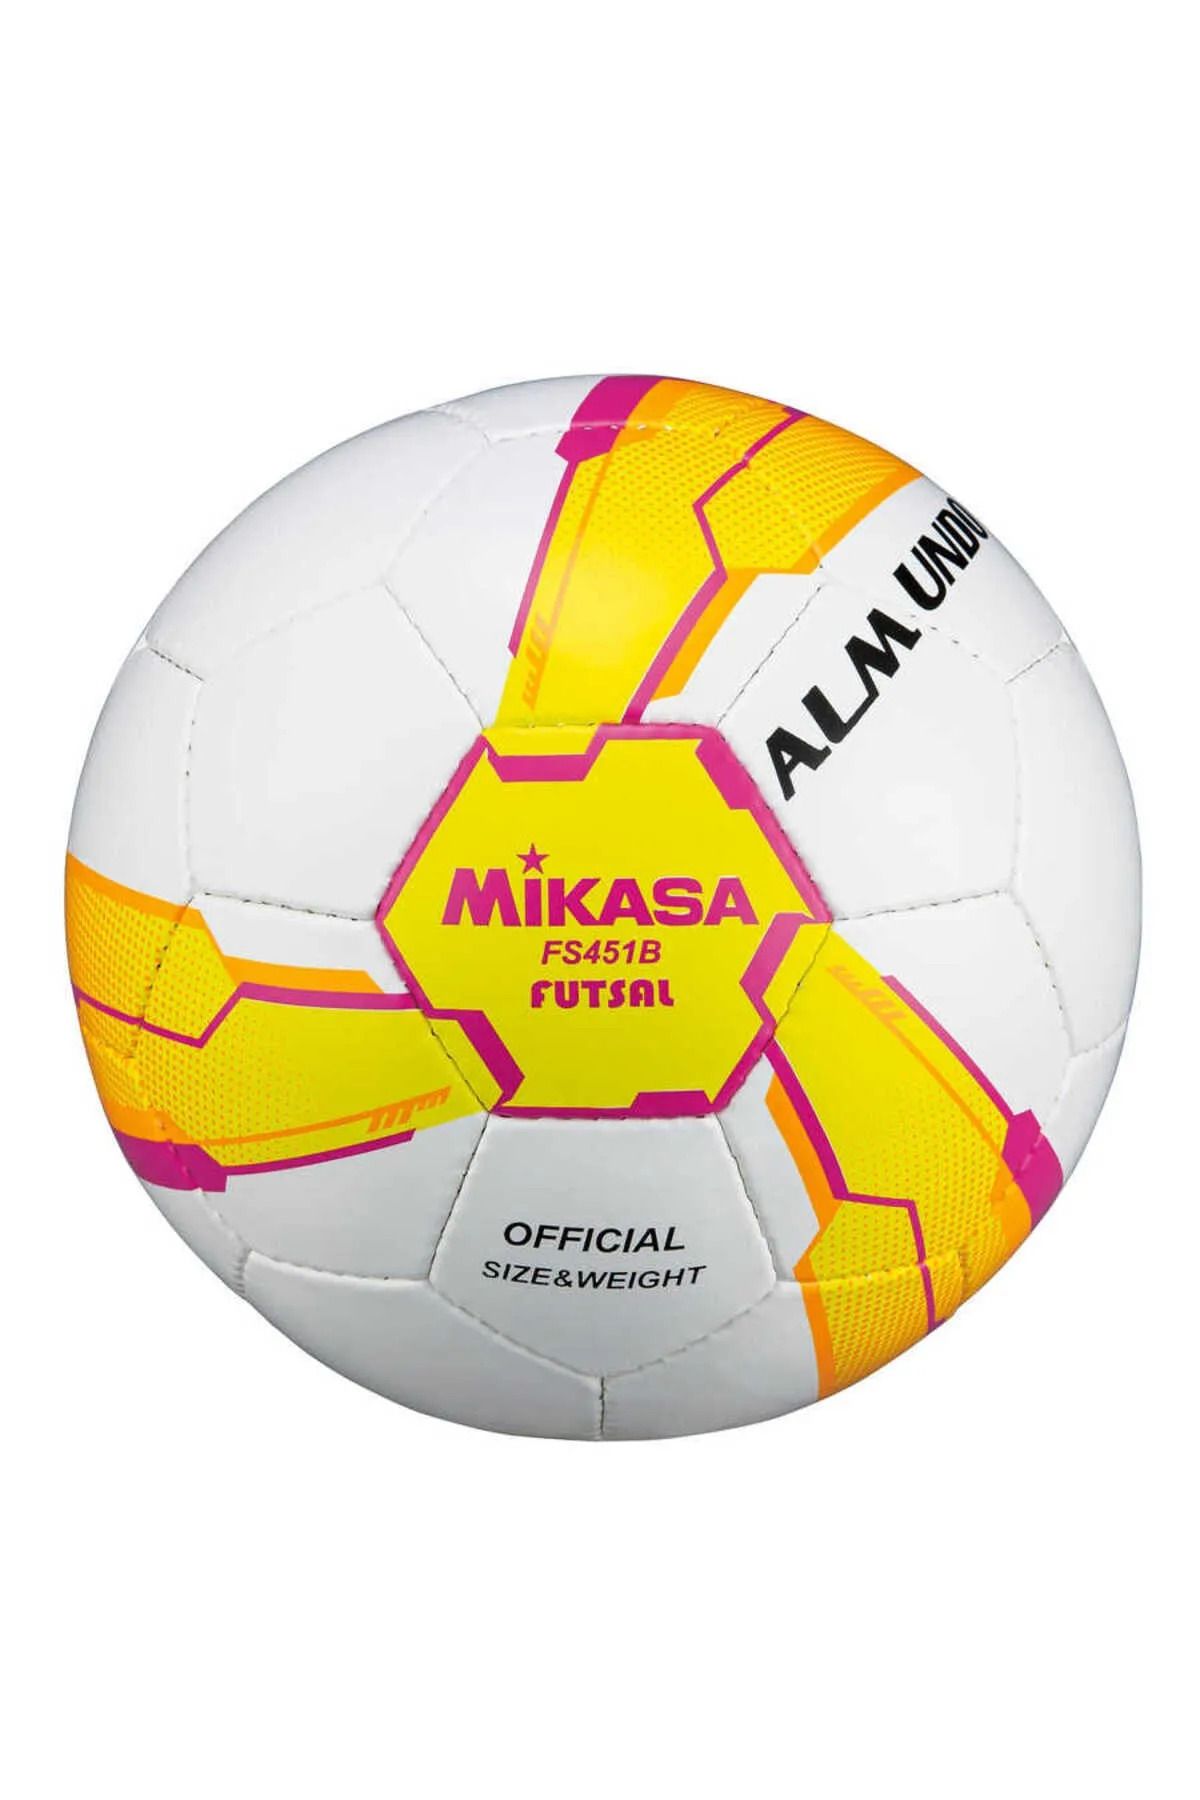 TOCSPORTS Sarı Kırmızı Beyaz Futsal Topu - Salon Futbol Topu - Pompa Dahil